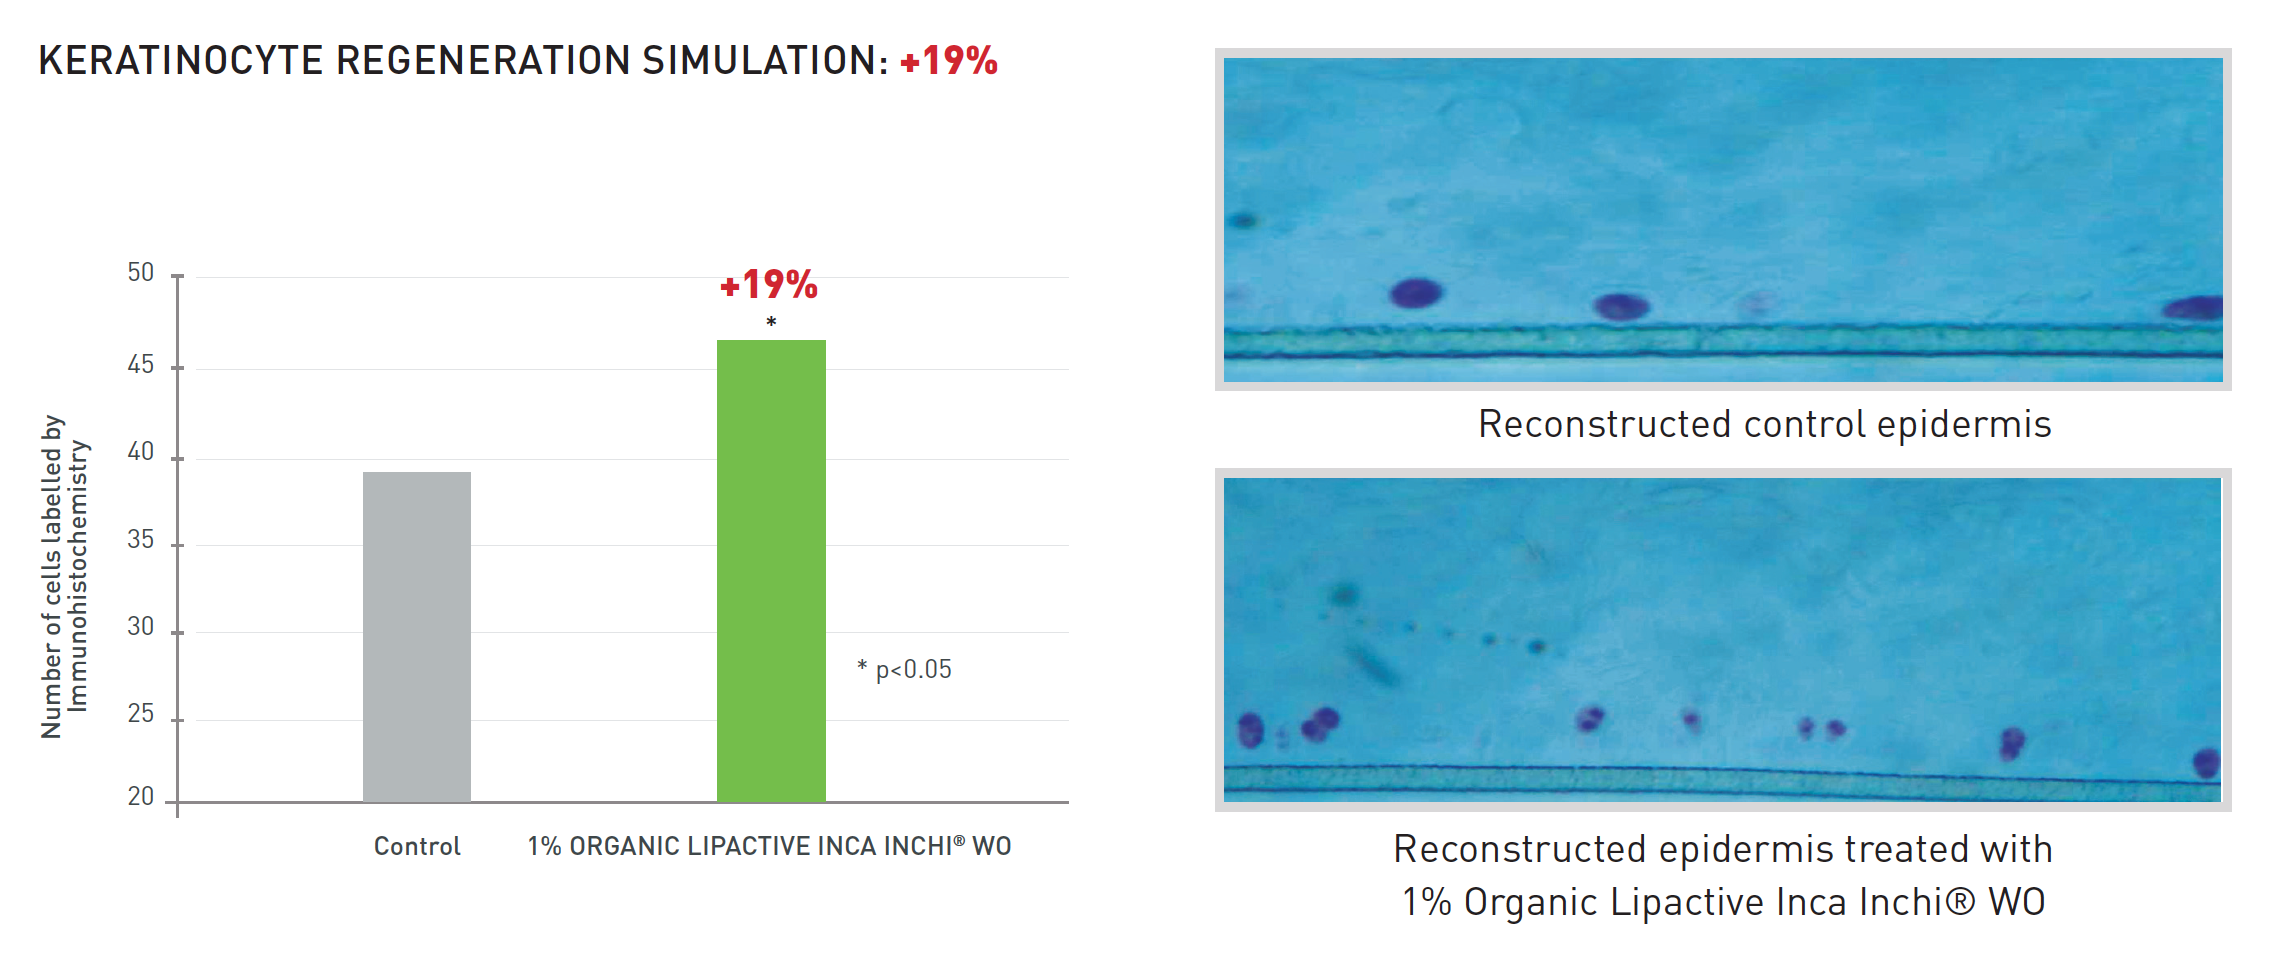 Keratinocyte Regenration Simulation: +19% vs. Control. Reconstructed epidermis microscopic imagery vs. control. 